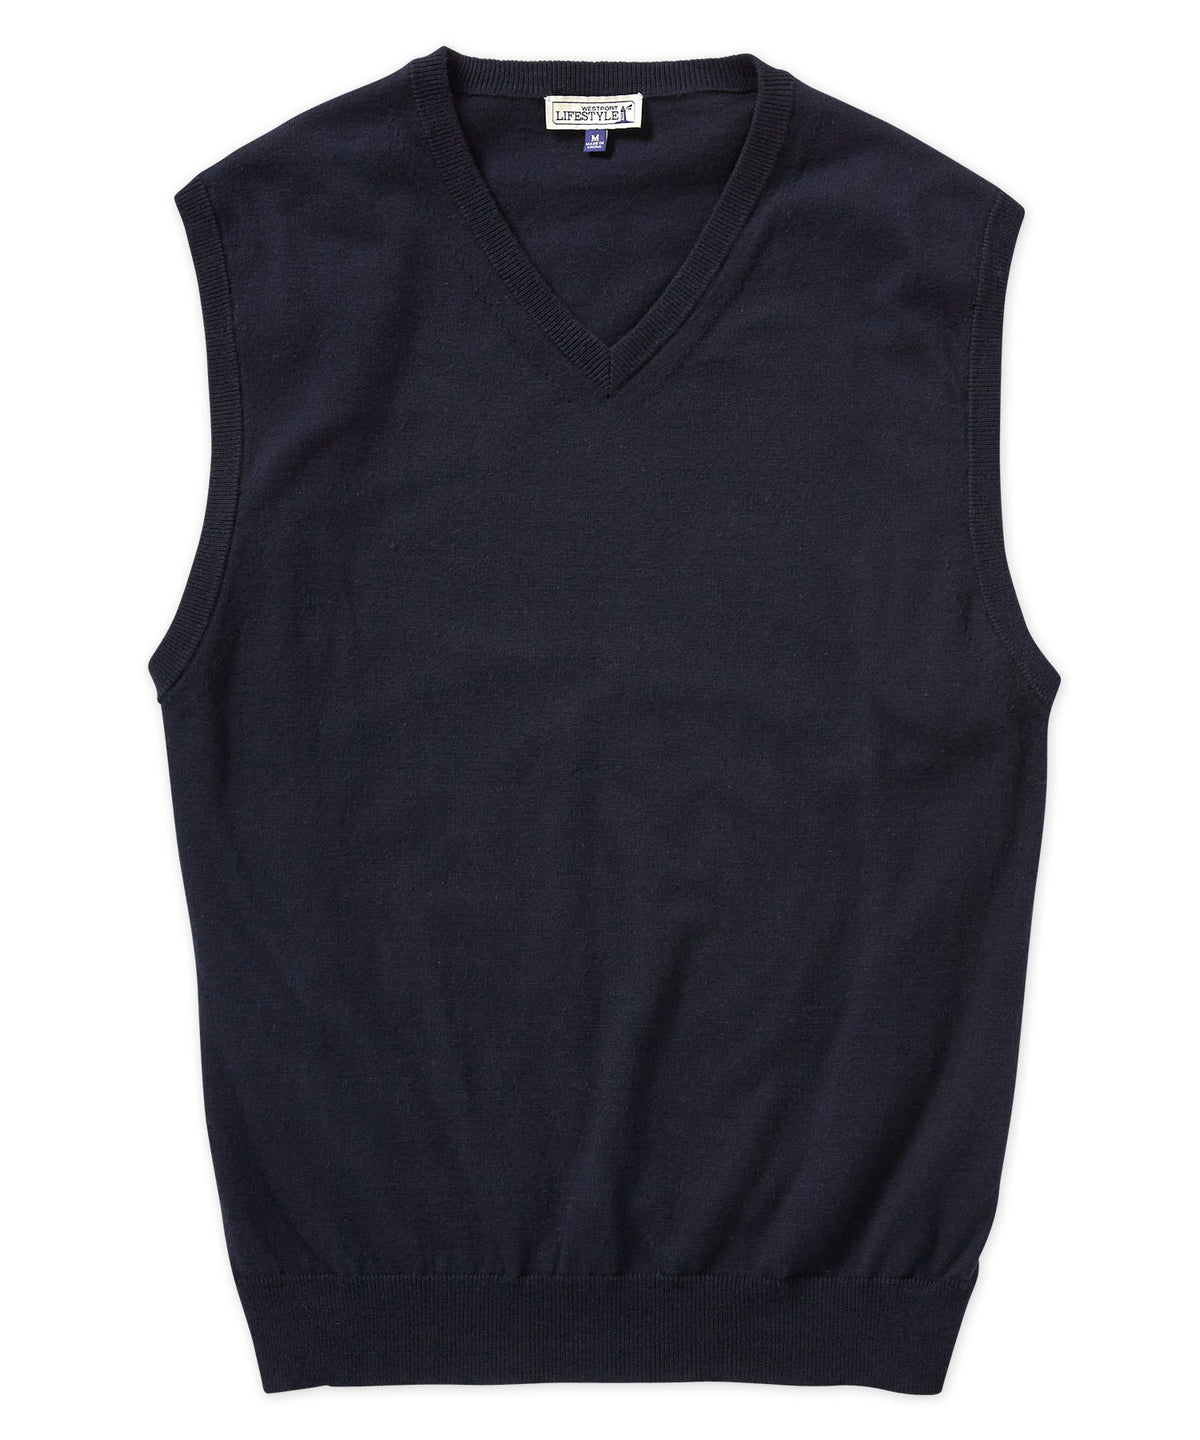 Westport Lifestyle Cotton Stretch V-Neck Sweater Vest, Big & Tall